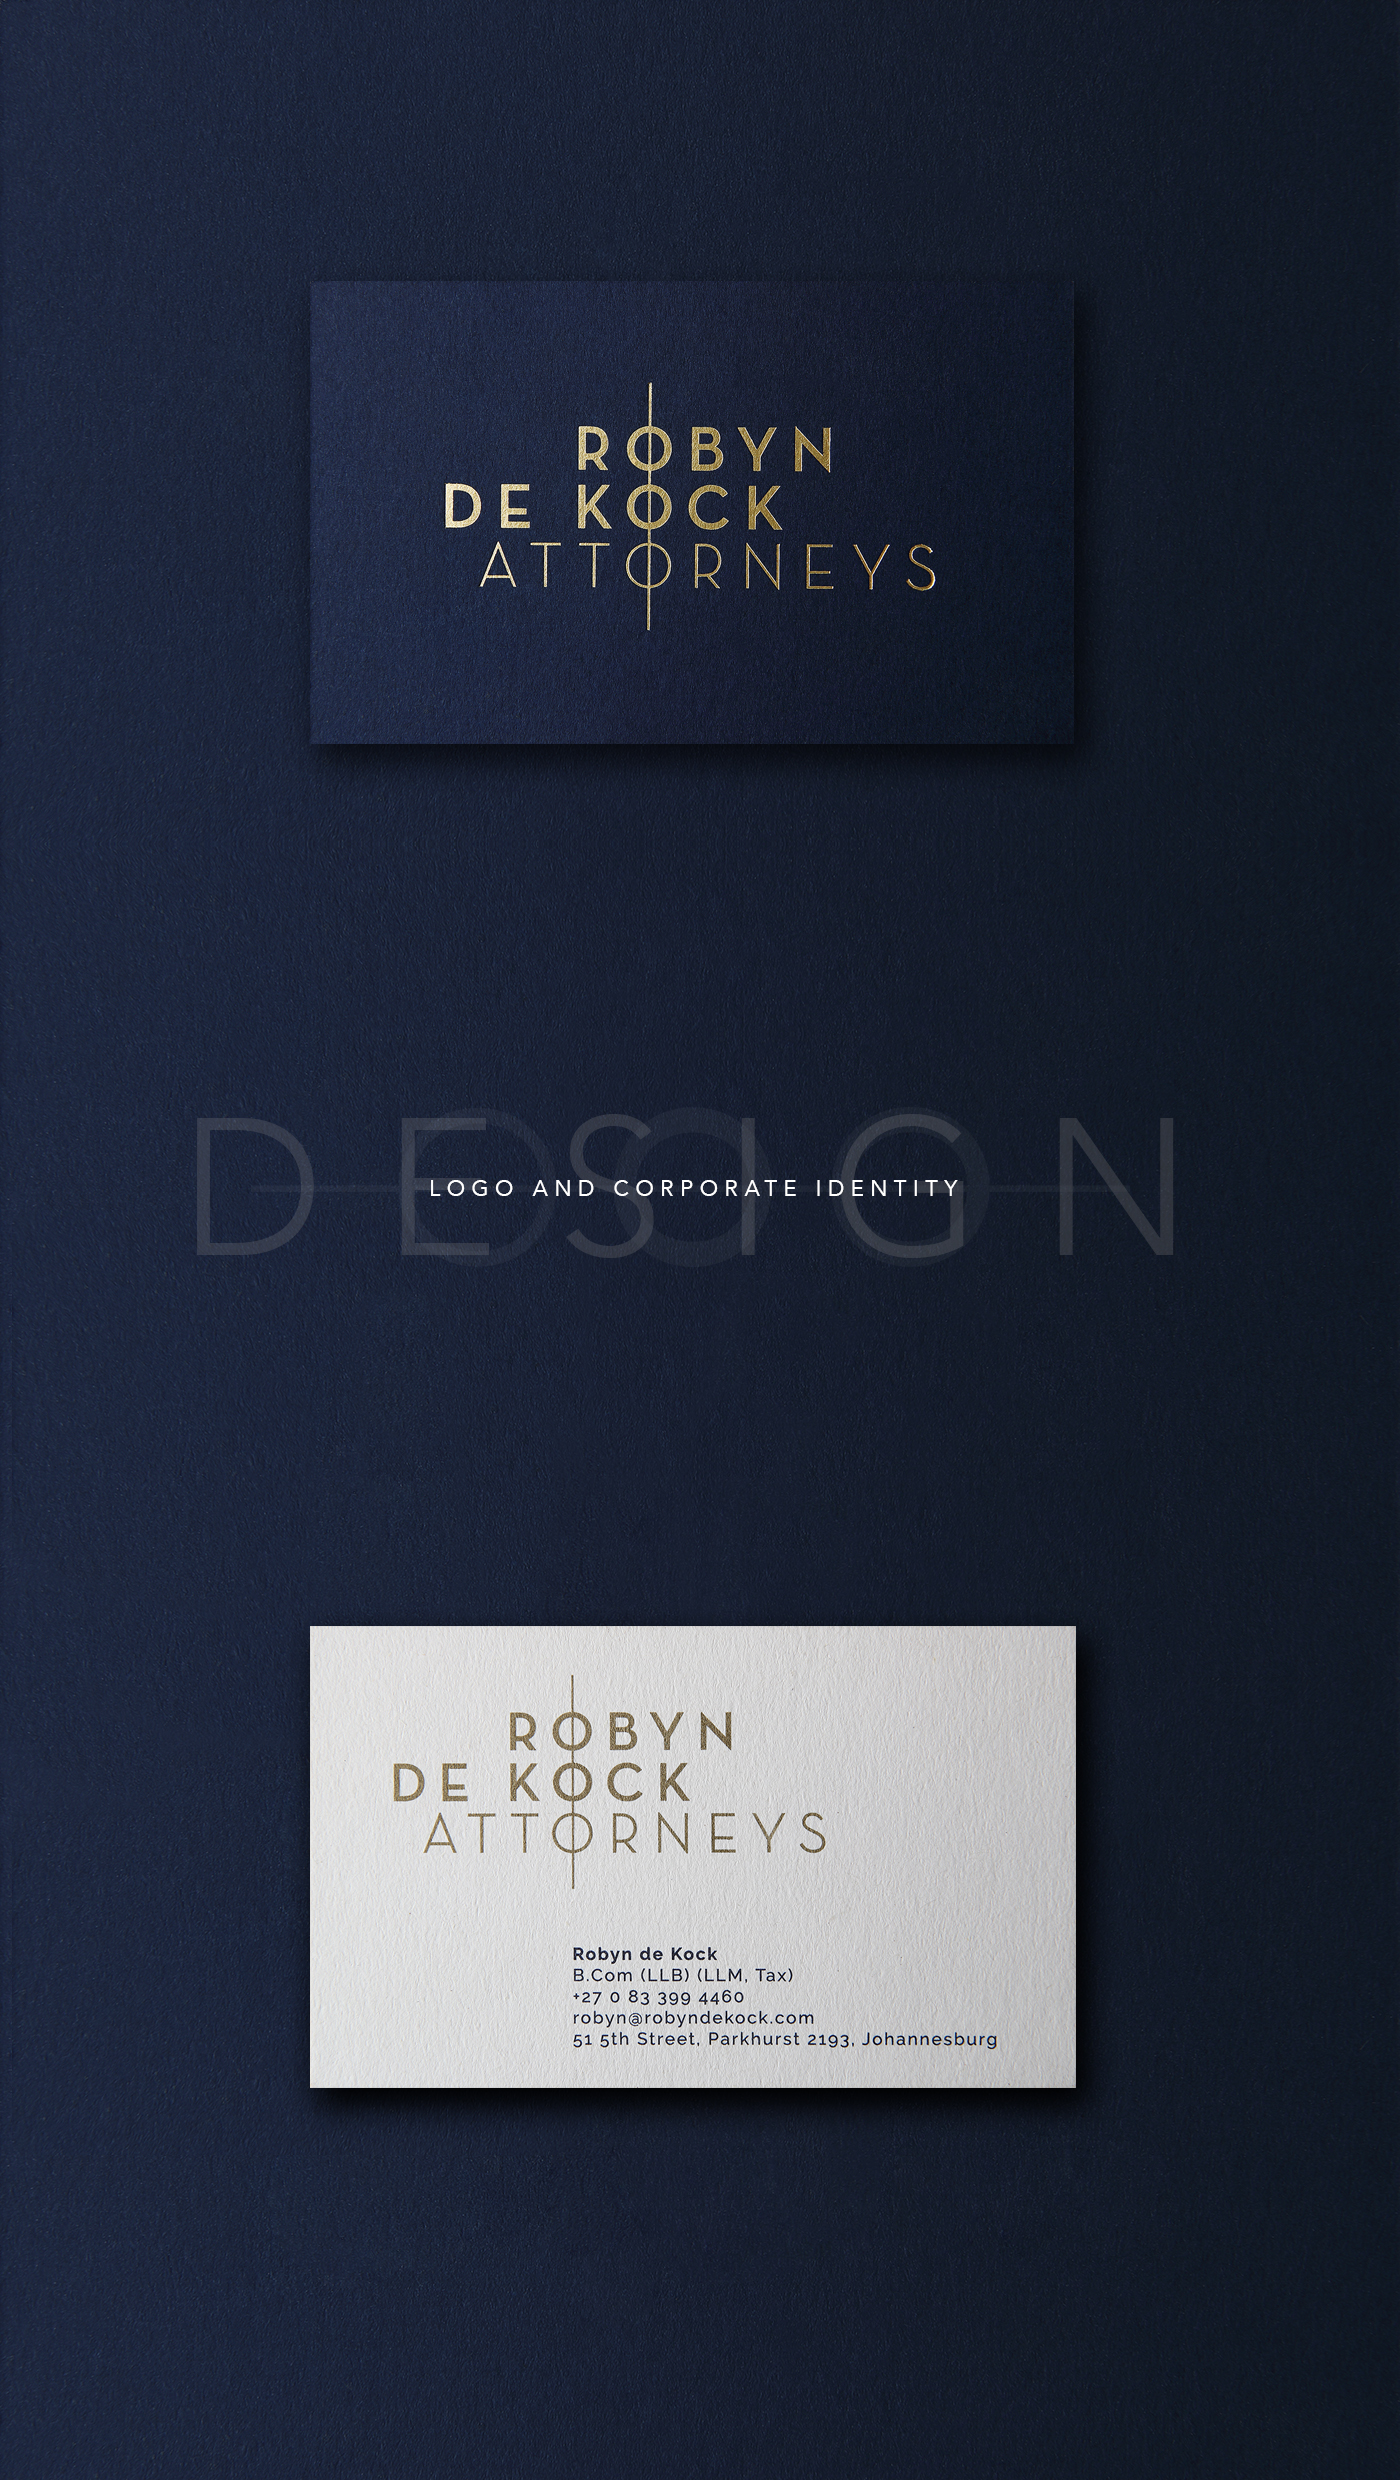 Robyn De Kock Attorneys business card design. By MR.SMiTH